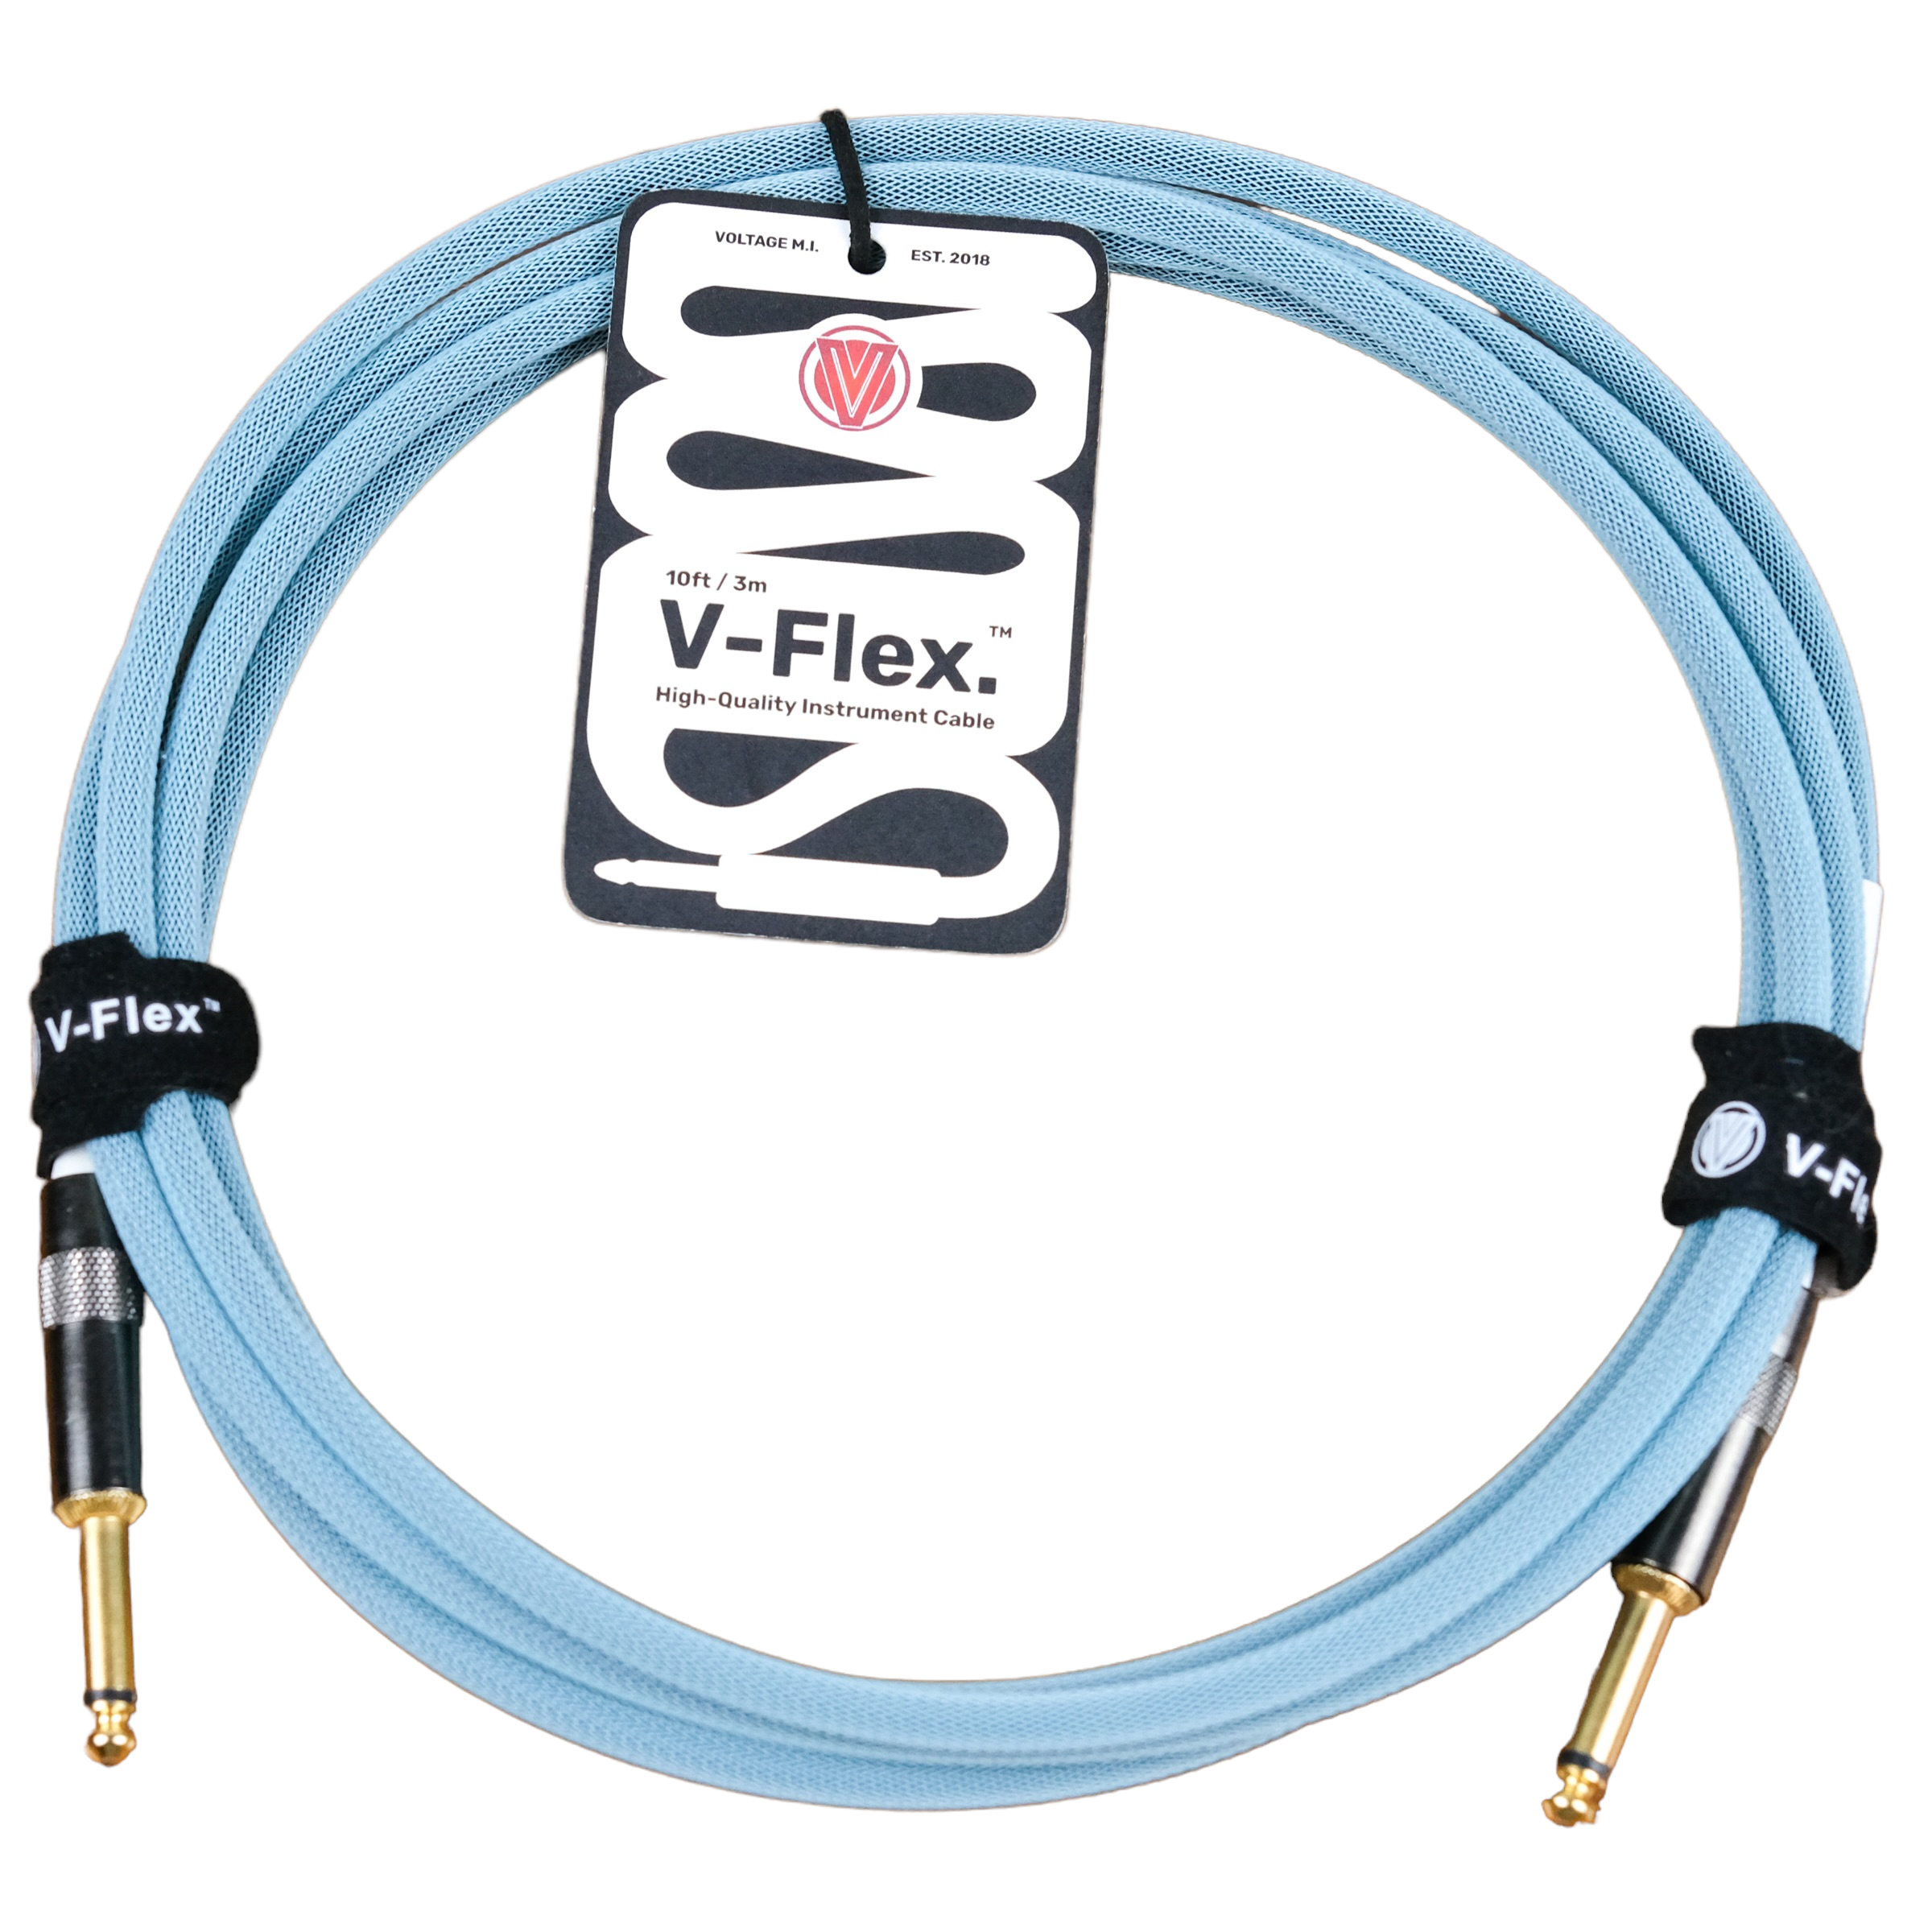 Voltage 10ft V-Flex High Quality Instrument Cable